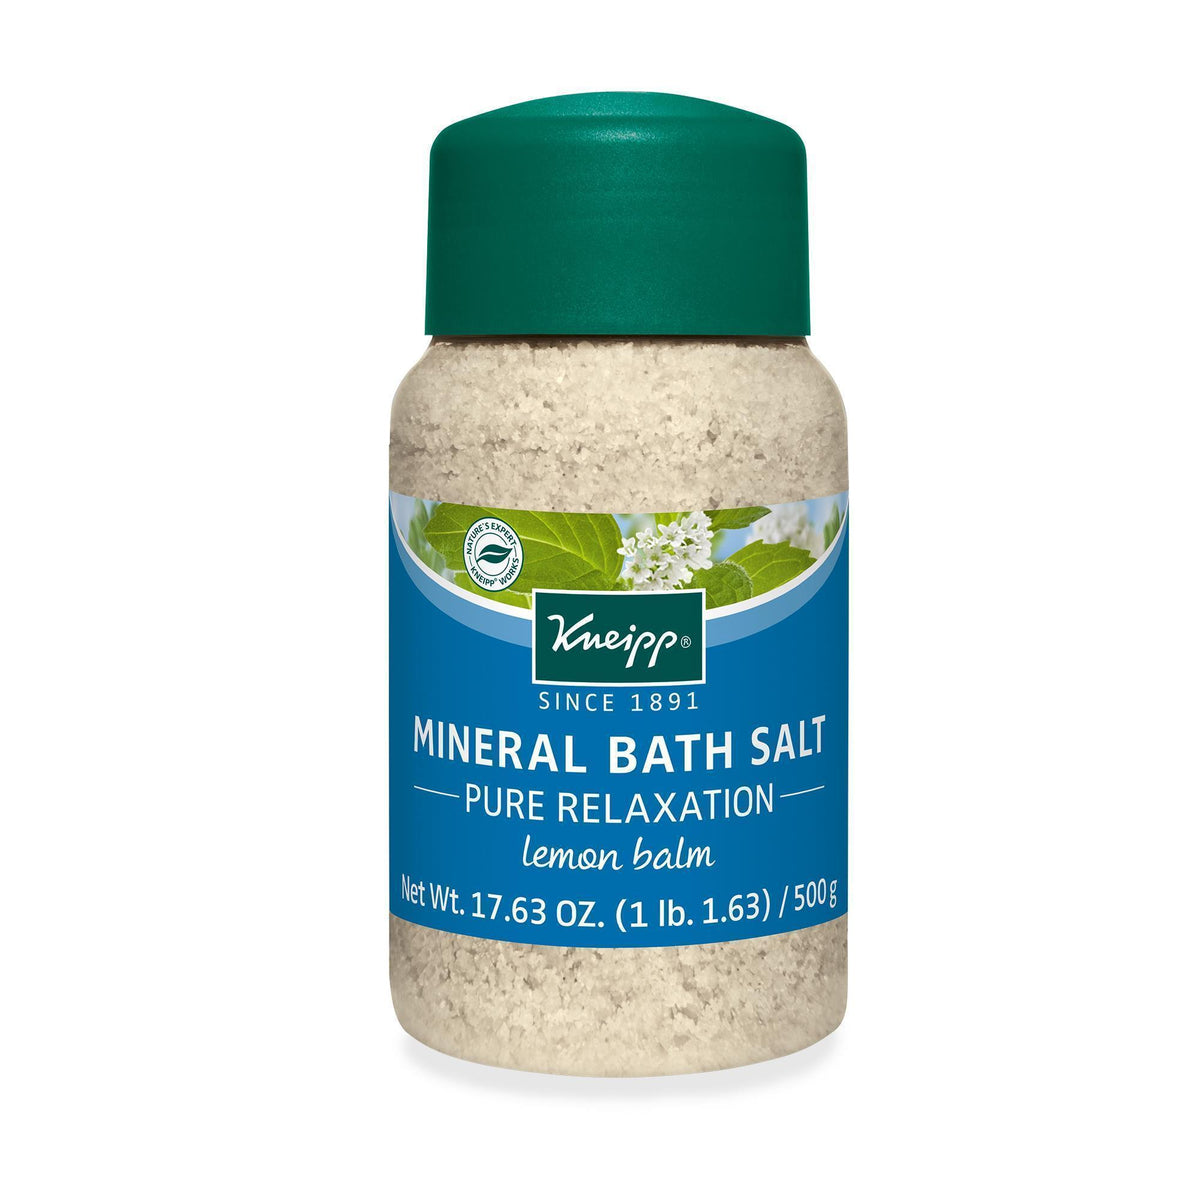 Kneipp Pure Relaxation Mineral Bath Salt